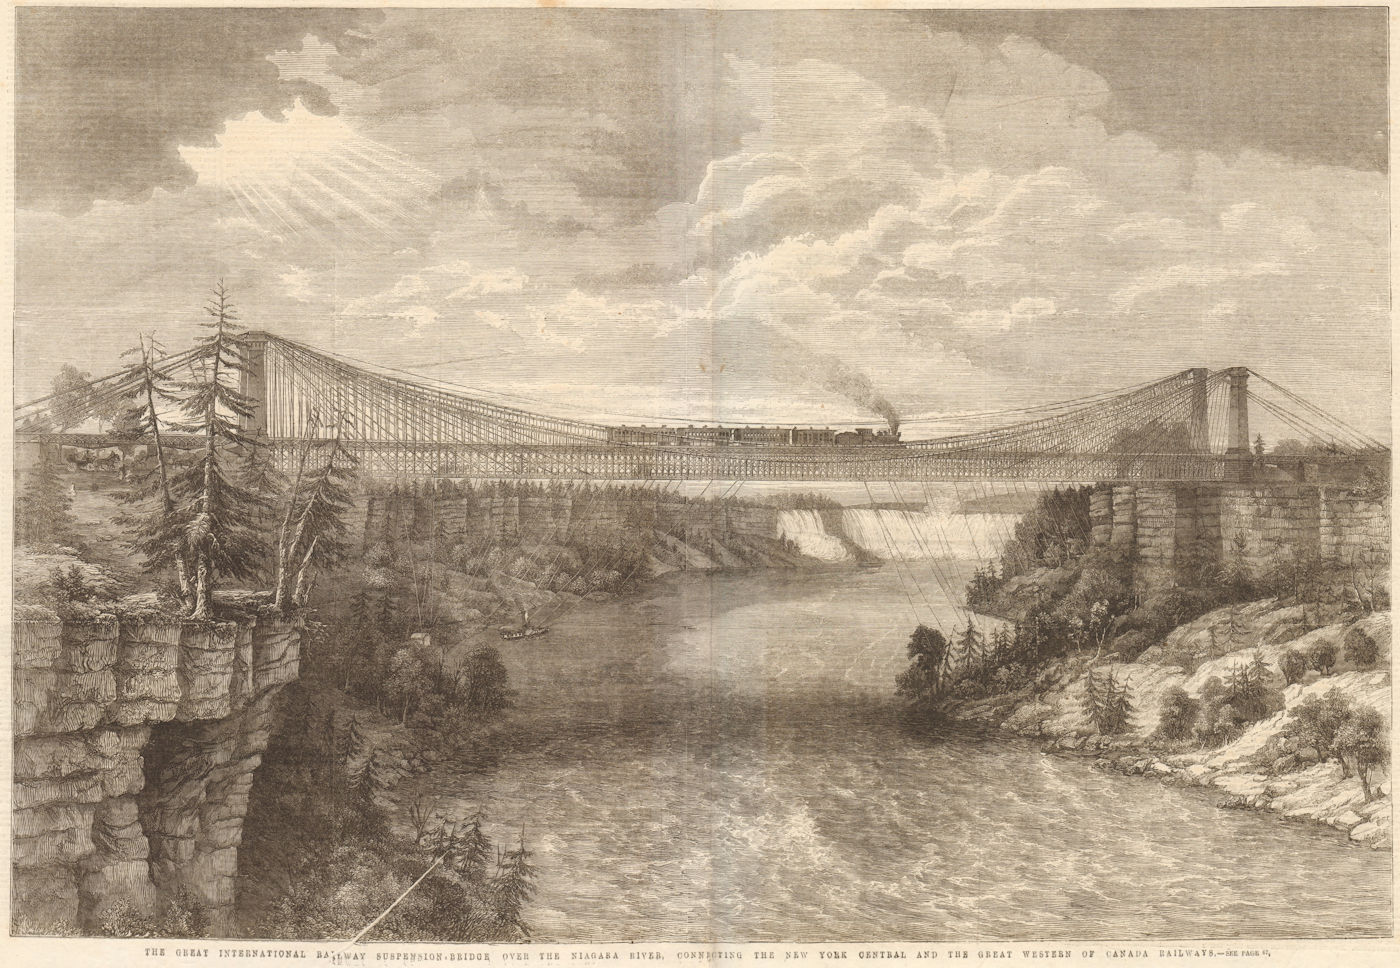 Associate Product Niagara River suspension bridge. NY Central & Great Western Canada Railway 1862